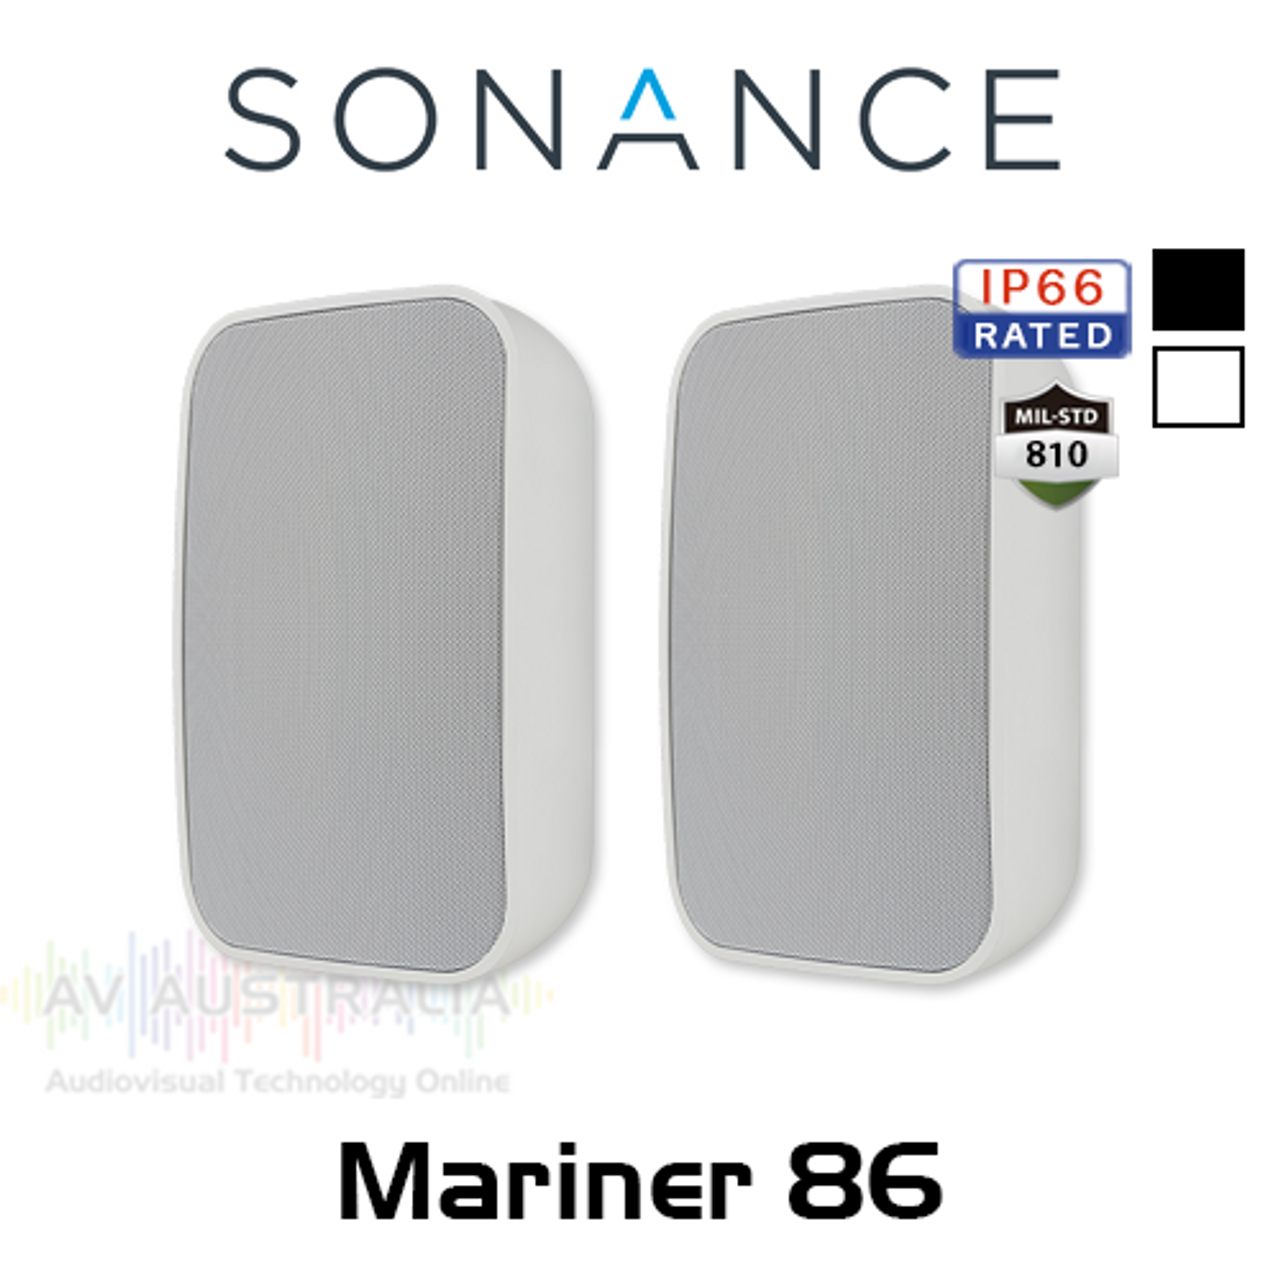 Sonance Mariner 86 8" All-Weather Outdoor Speakers (Pair)